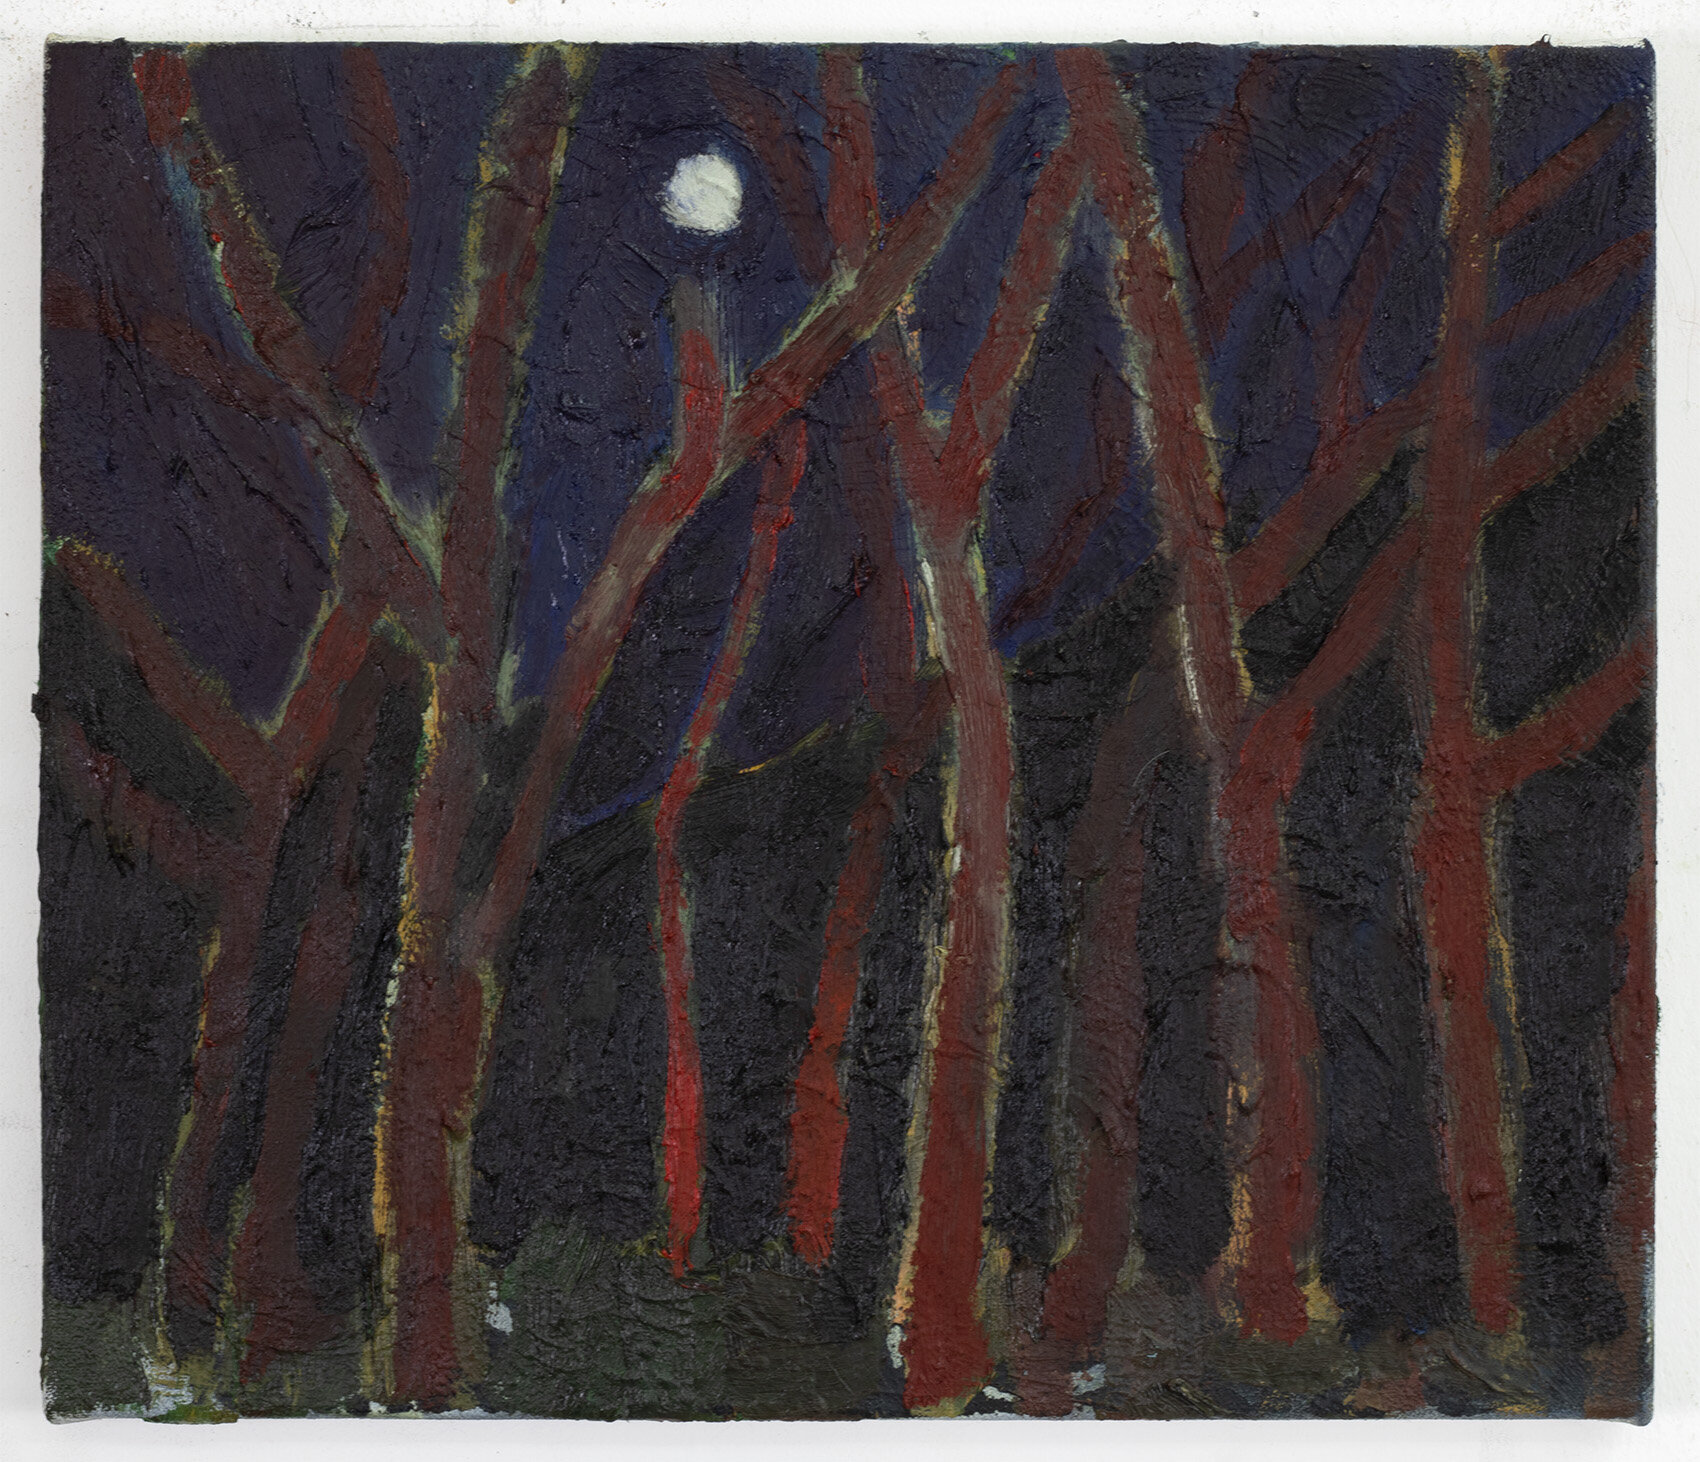 Moon Through the Trees (study), 2020